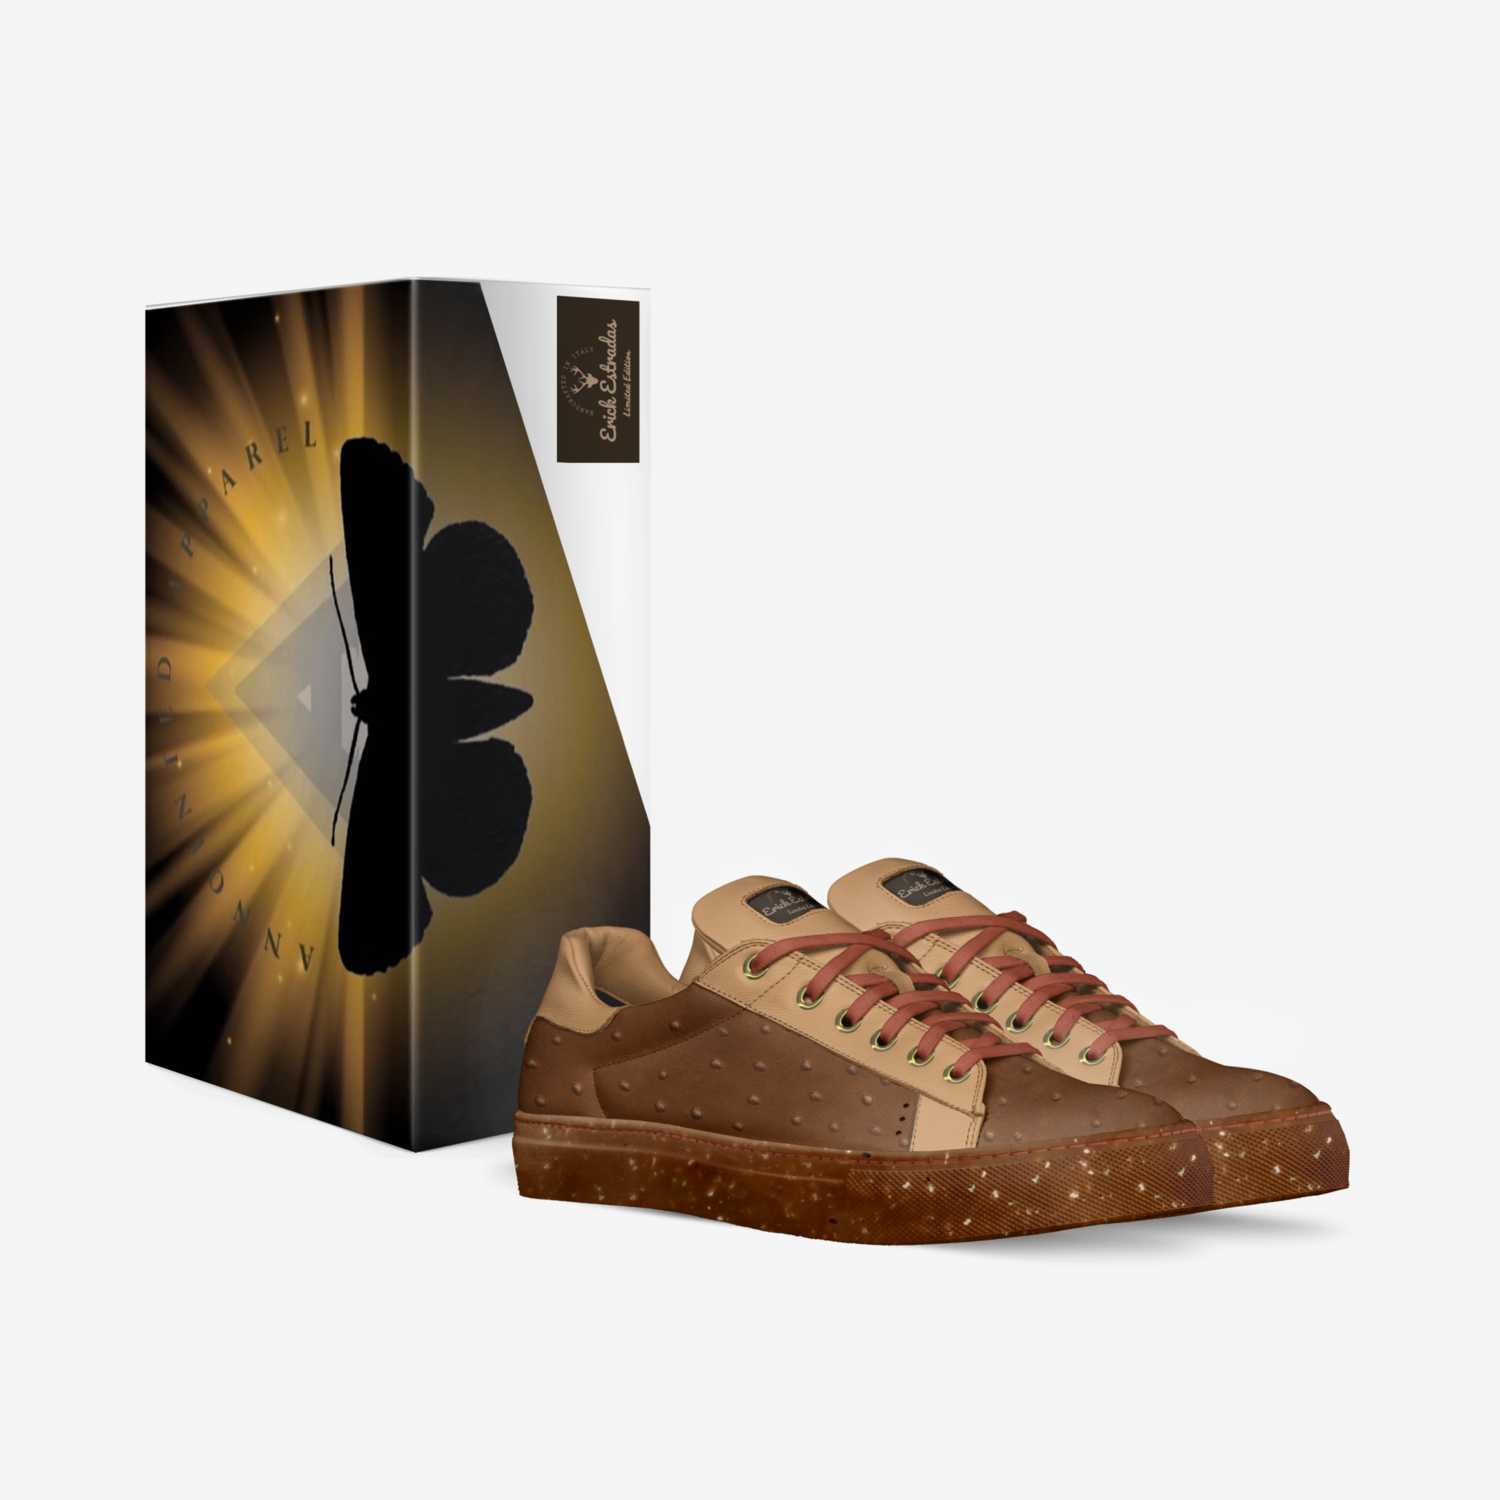 Erick Estradas custom made in Italy shoes by Erick Smith | Box view